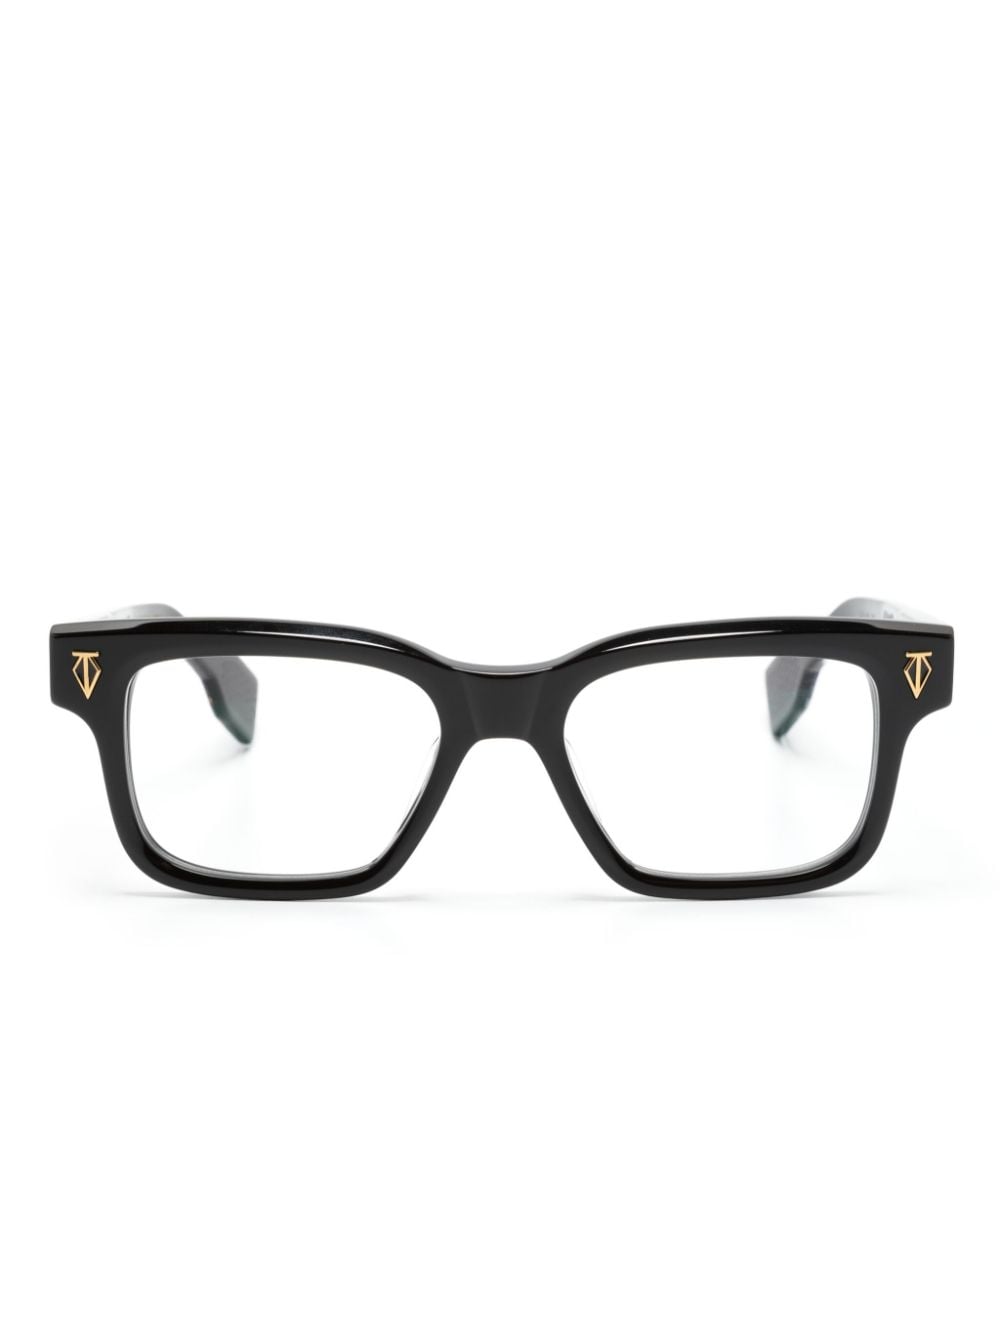 T Henri Eyewear Daytona square-frame glasses - Black von T Henri Eyewear